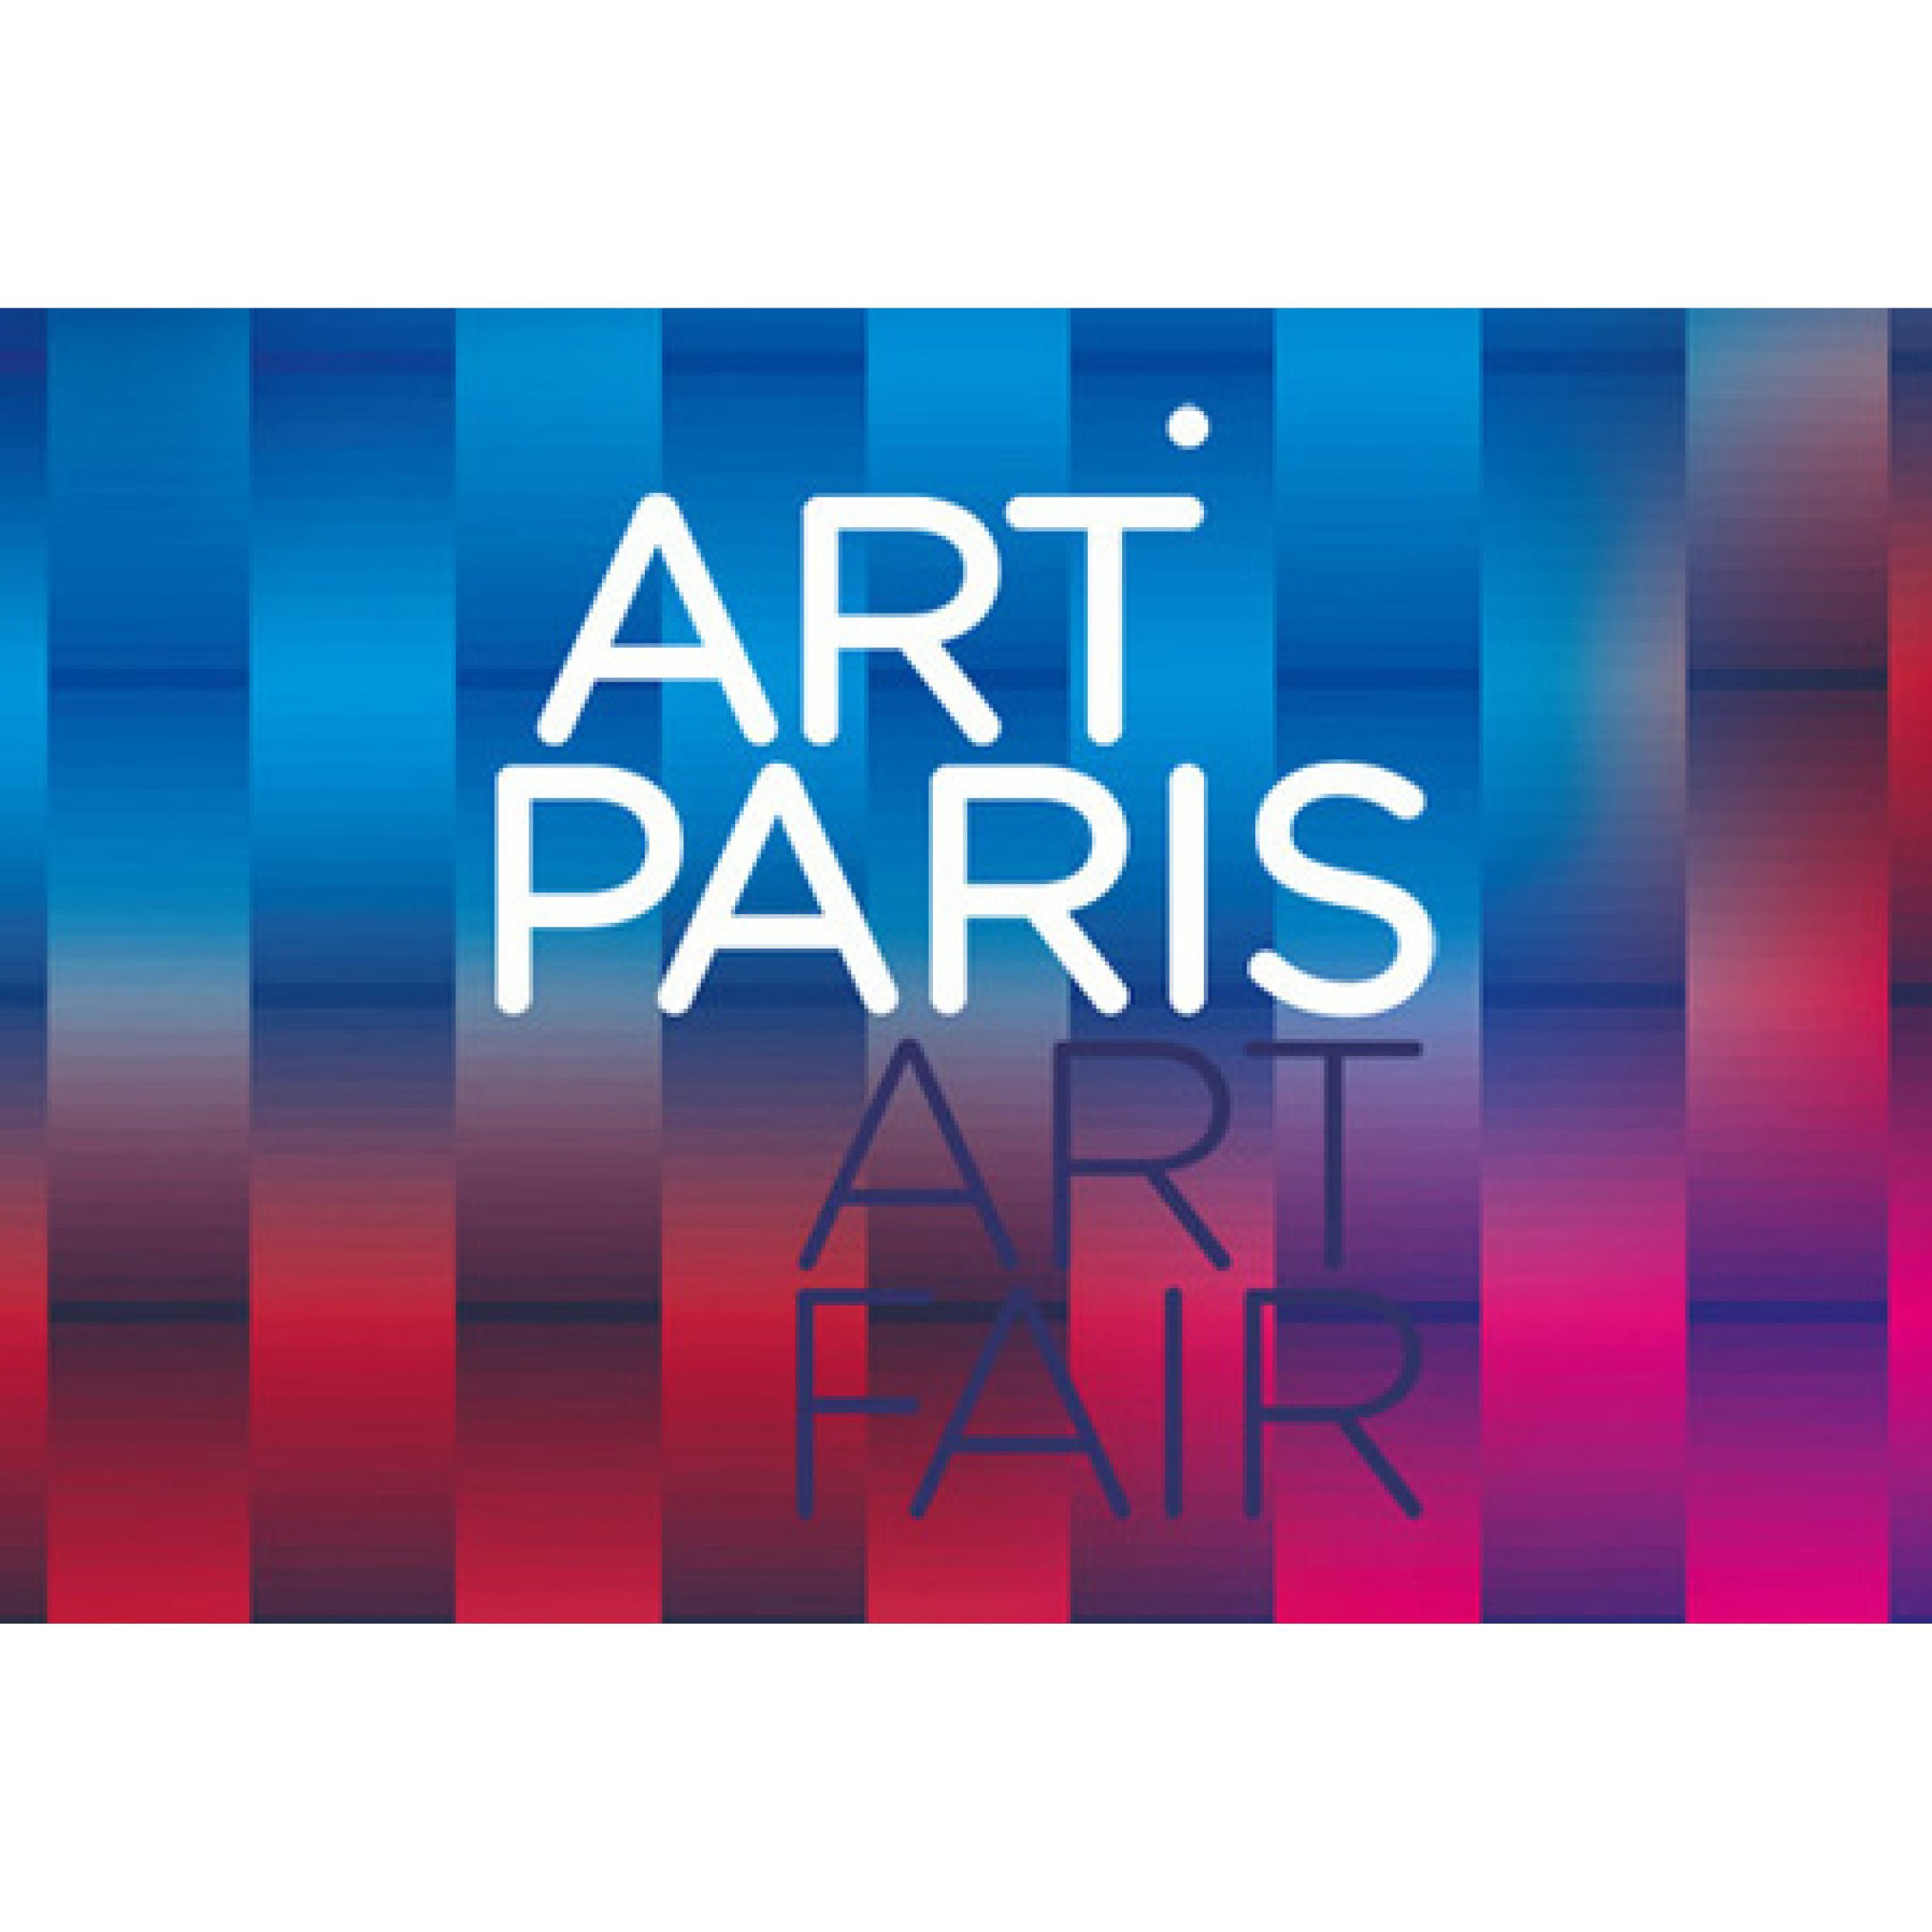 Art Paris Art Fair logo